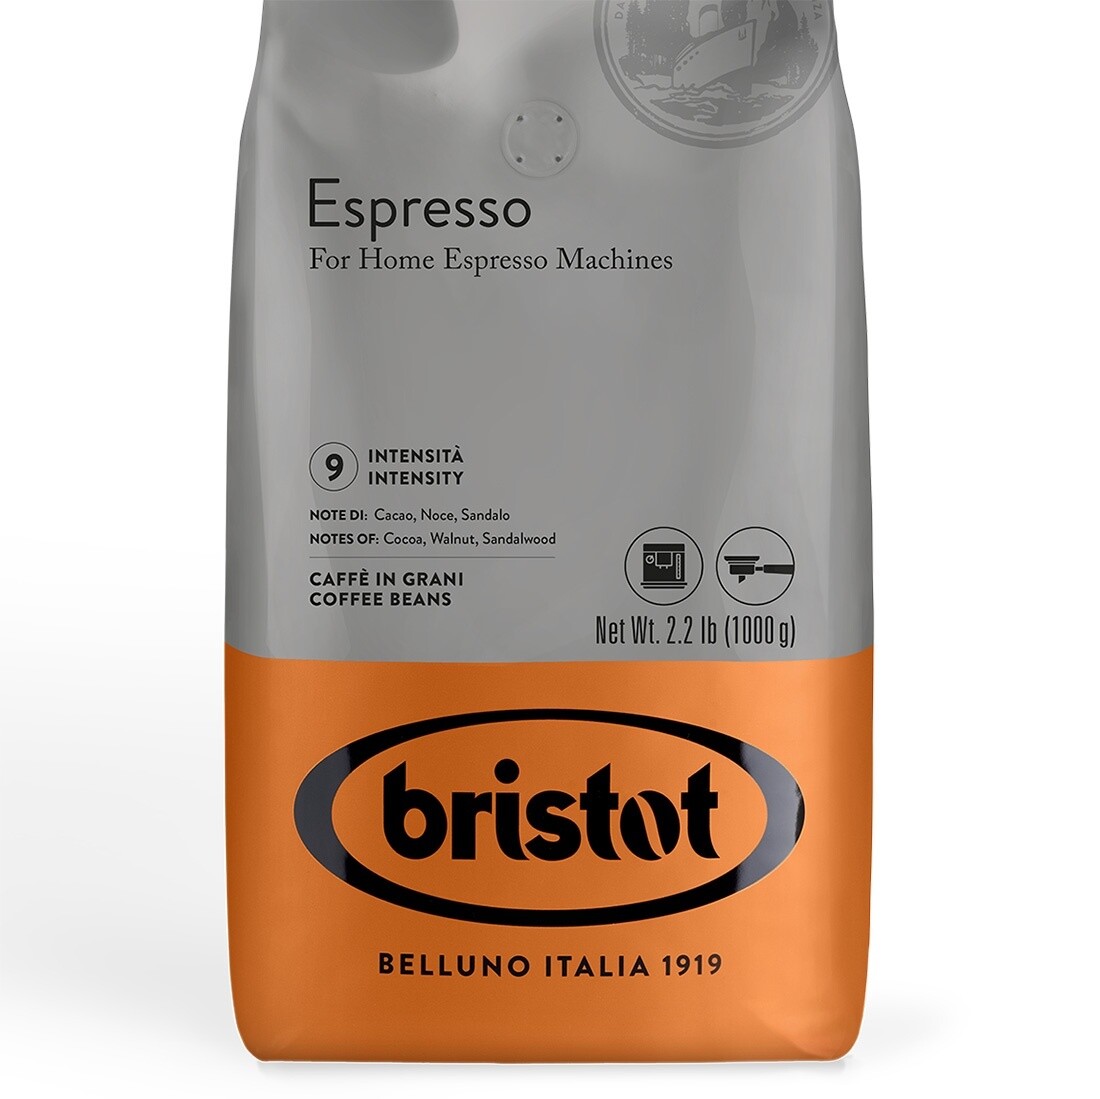 Bristot Espresso 1 kg 2.2 lbs Whole Bean Coffee